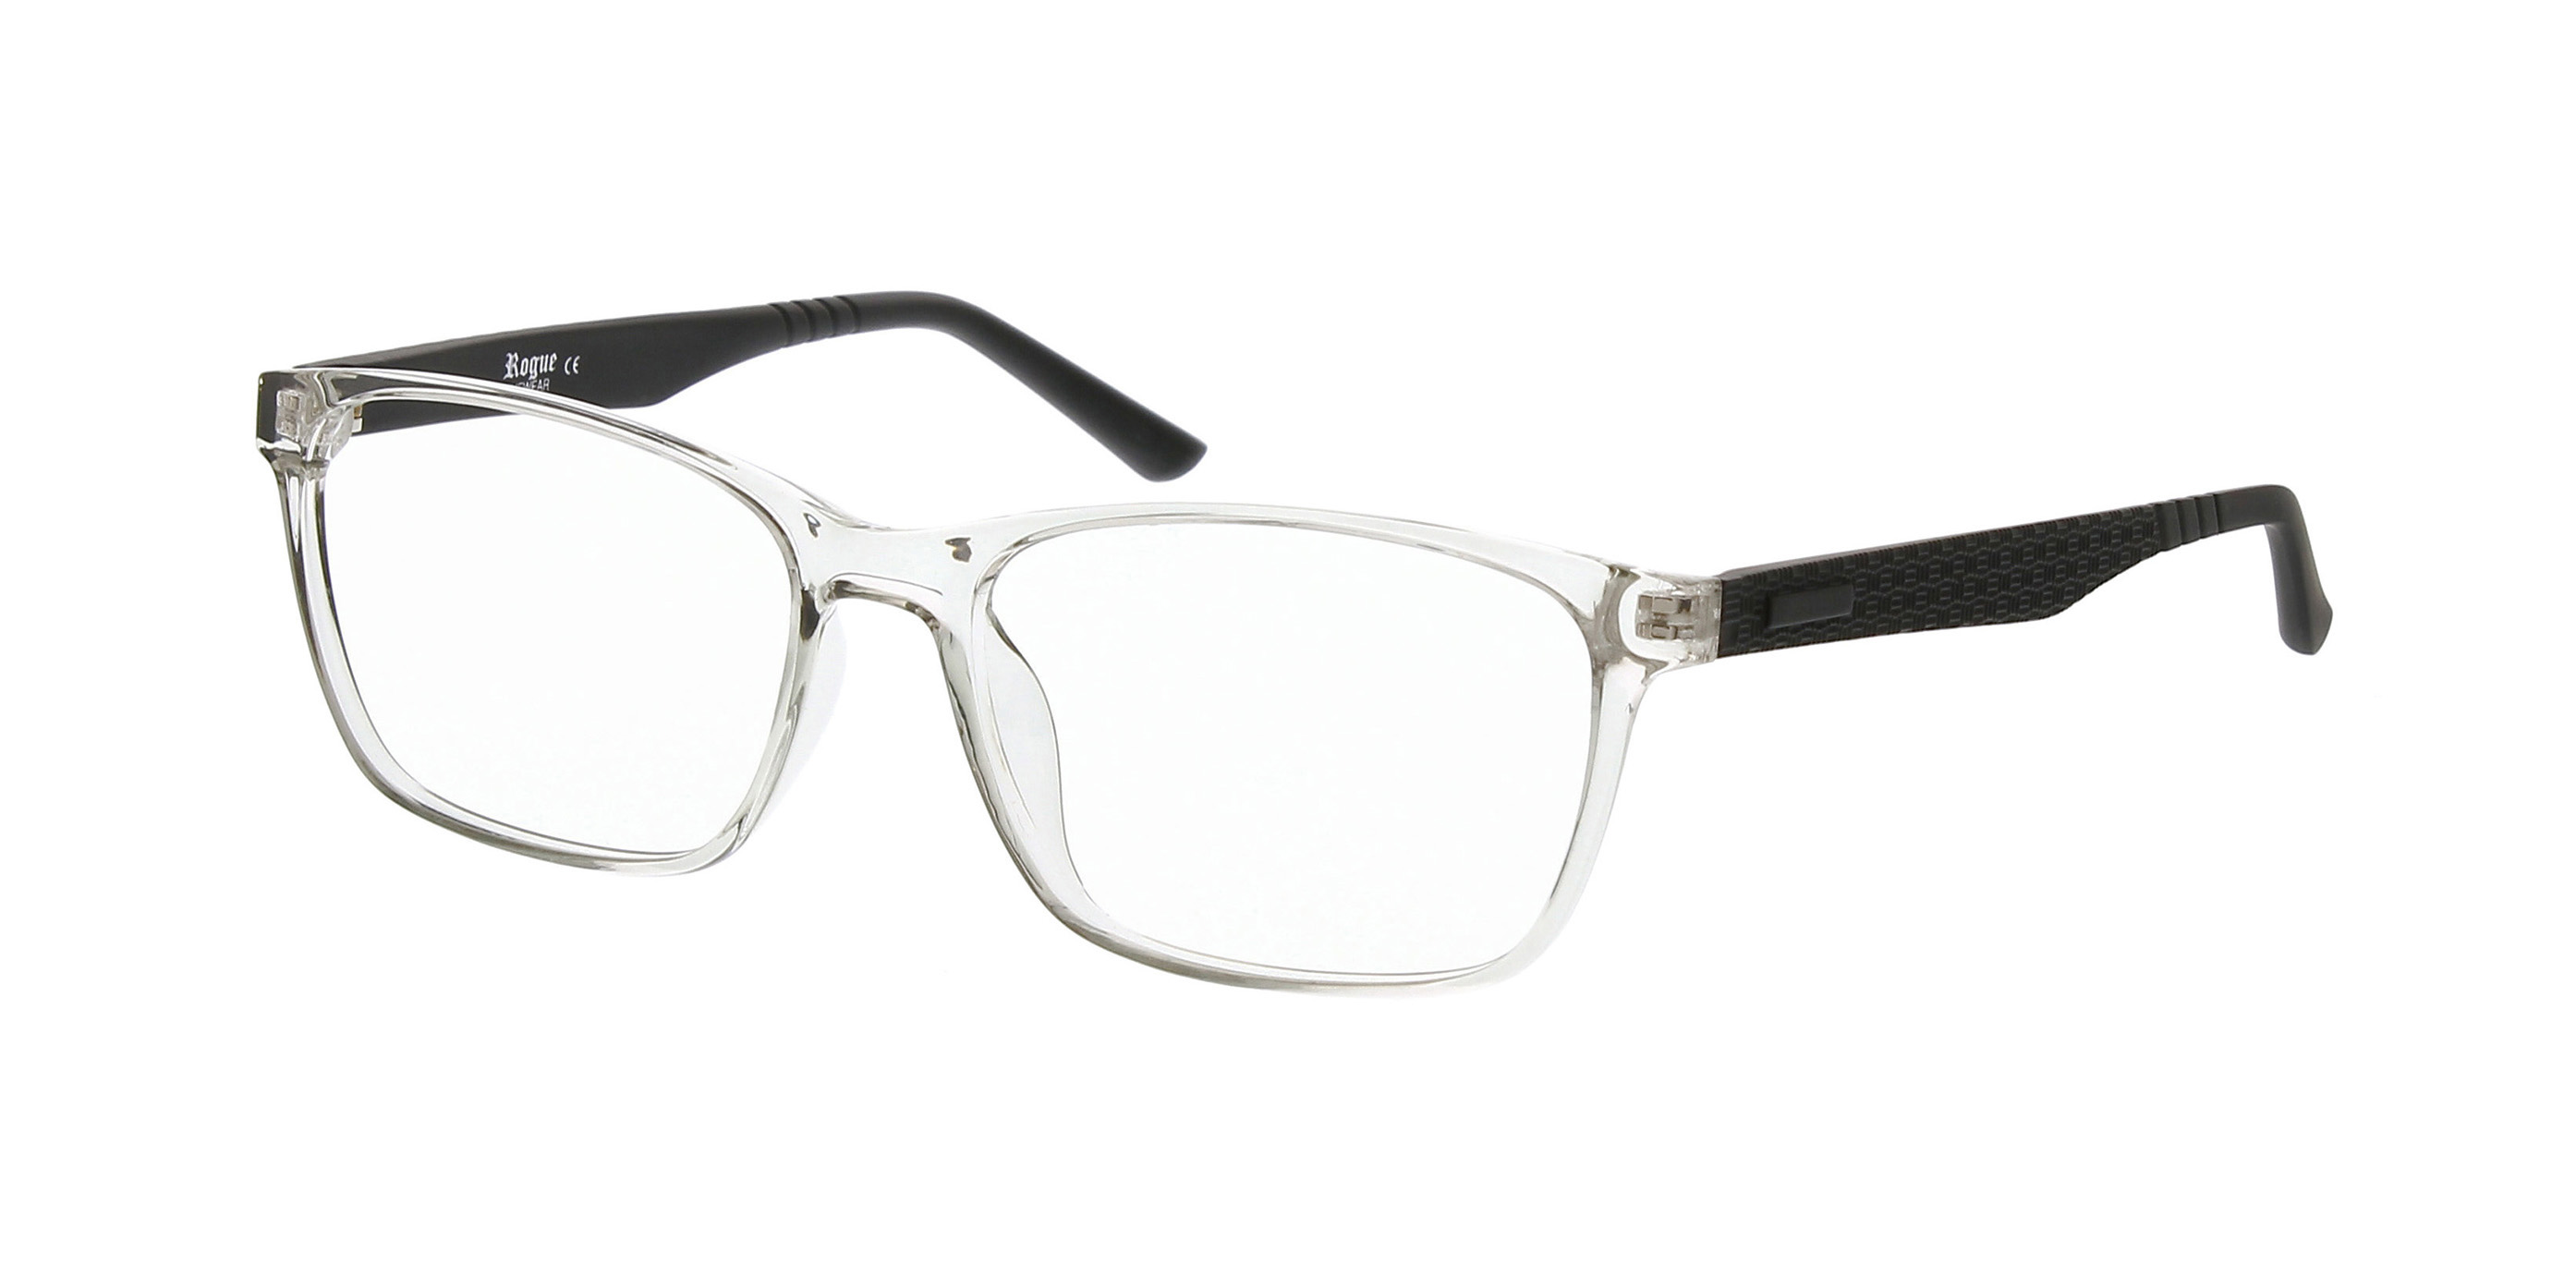 CRYSTAL Eyeglasses by 39DollarGlasses.com